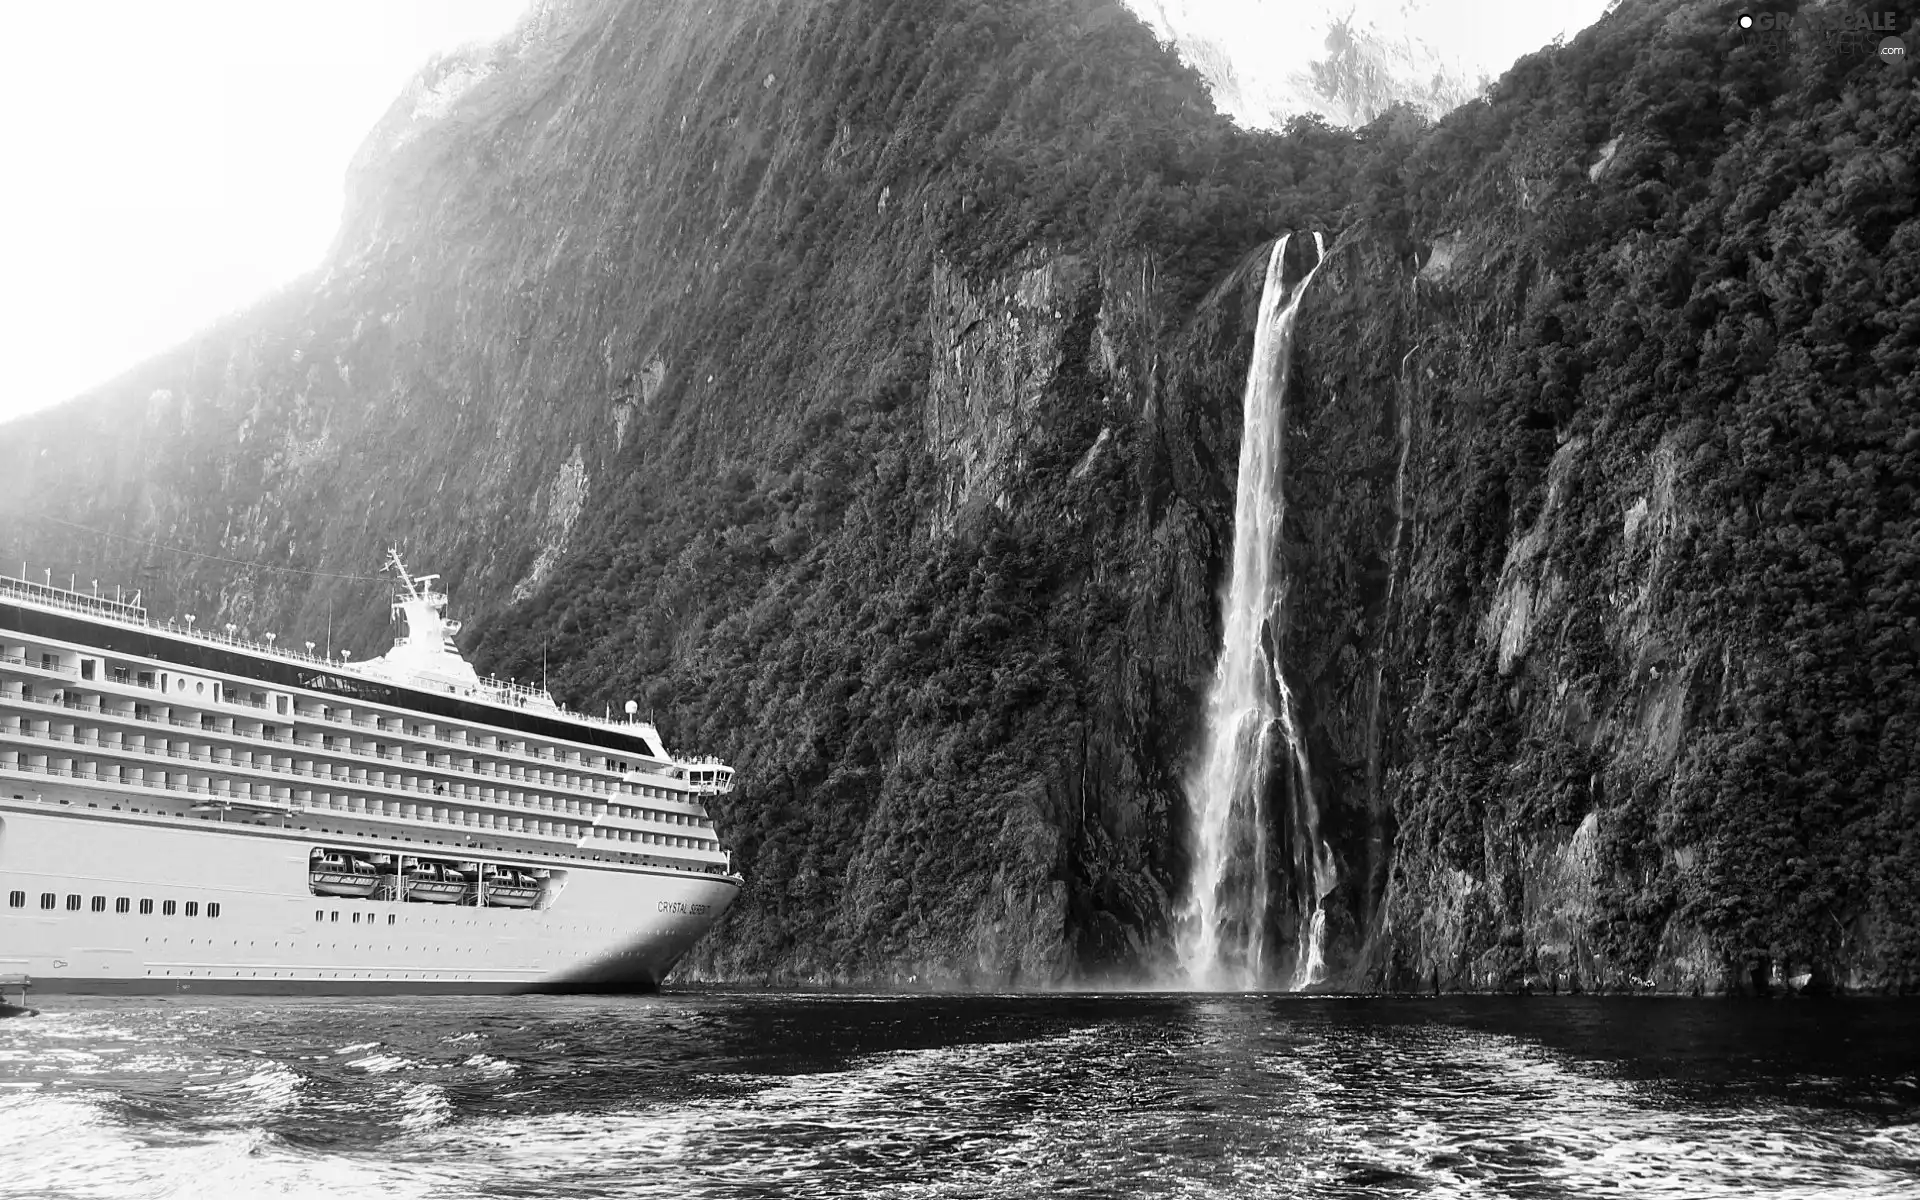 Ship, Mountains, waterfall, passenger